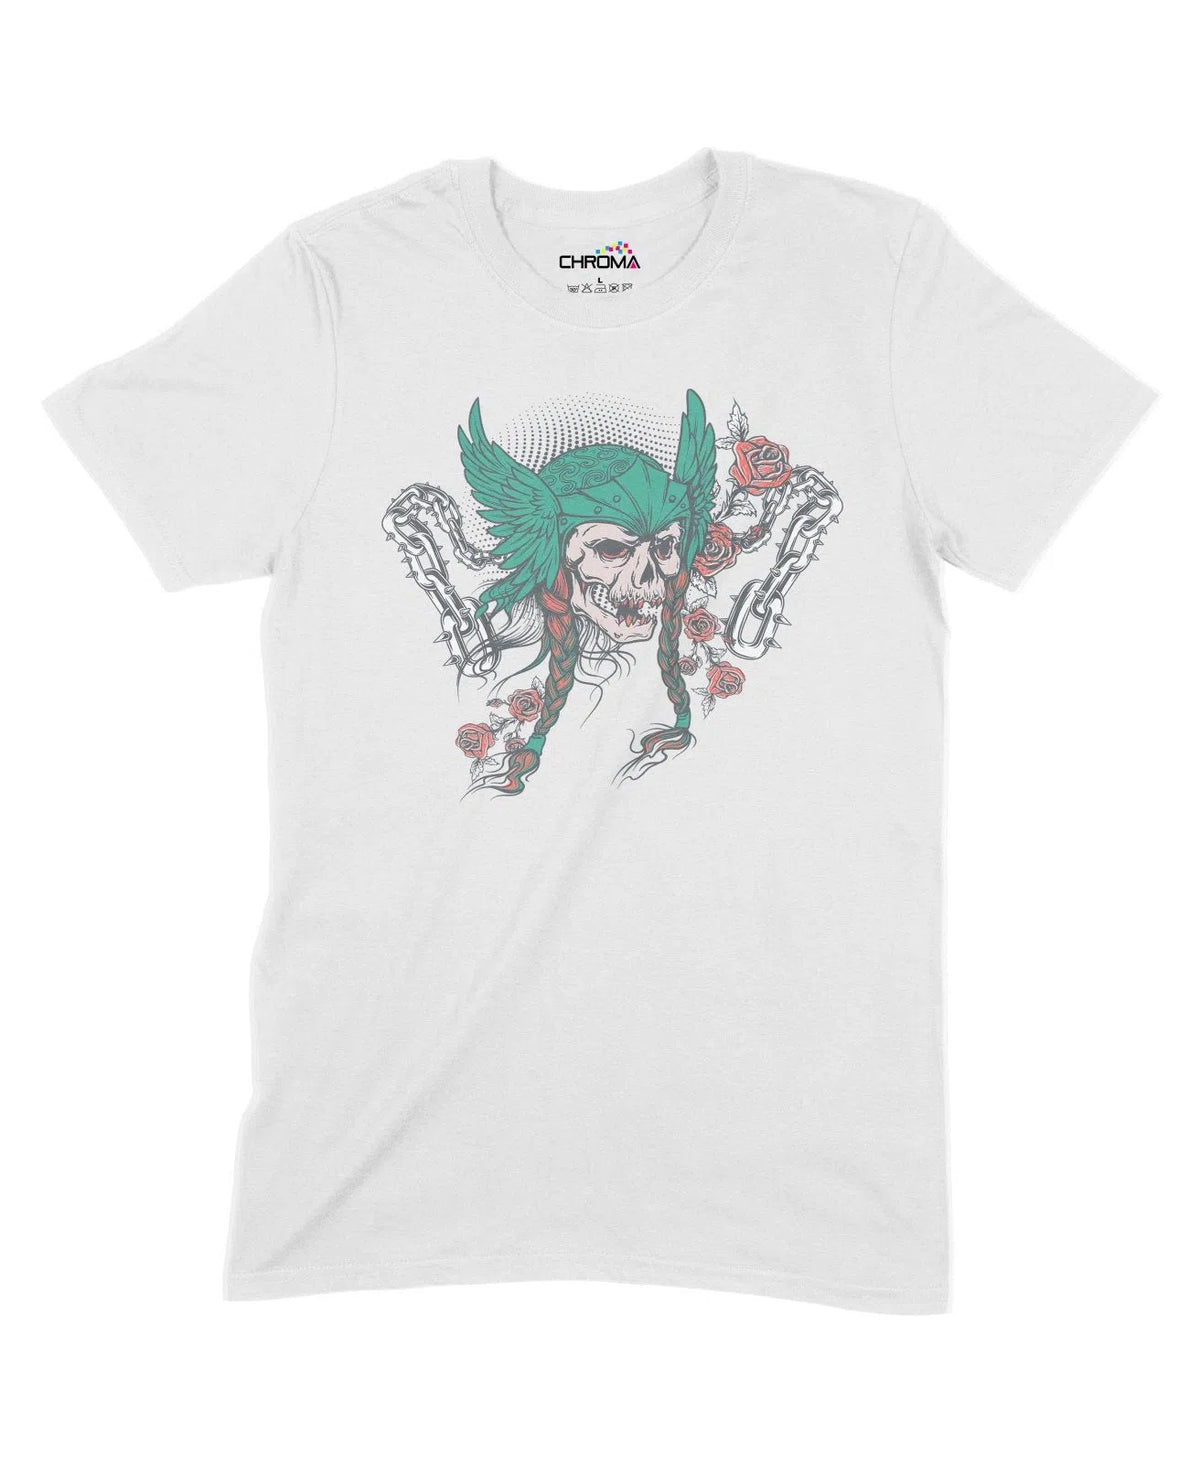 Chained Skull Maiden Unisex Adult T-Shirt Chroma Clothing